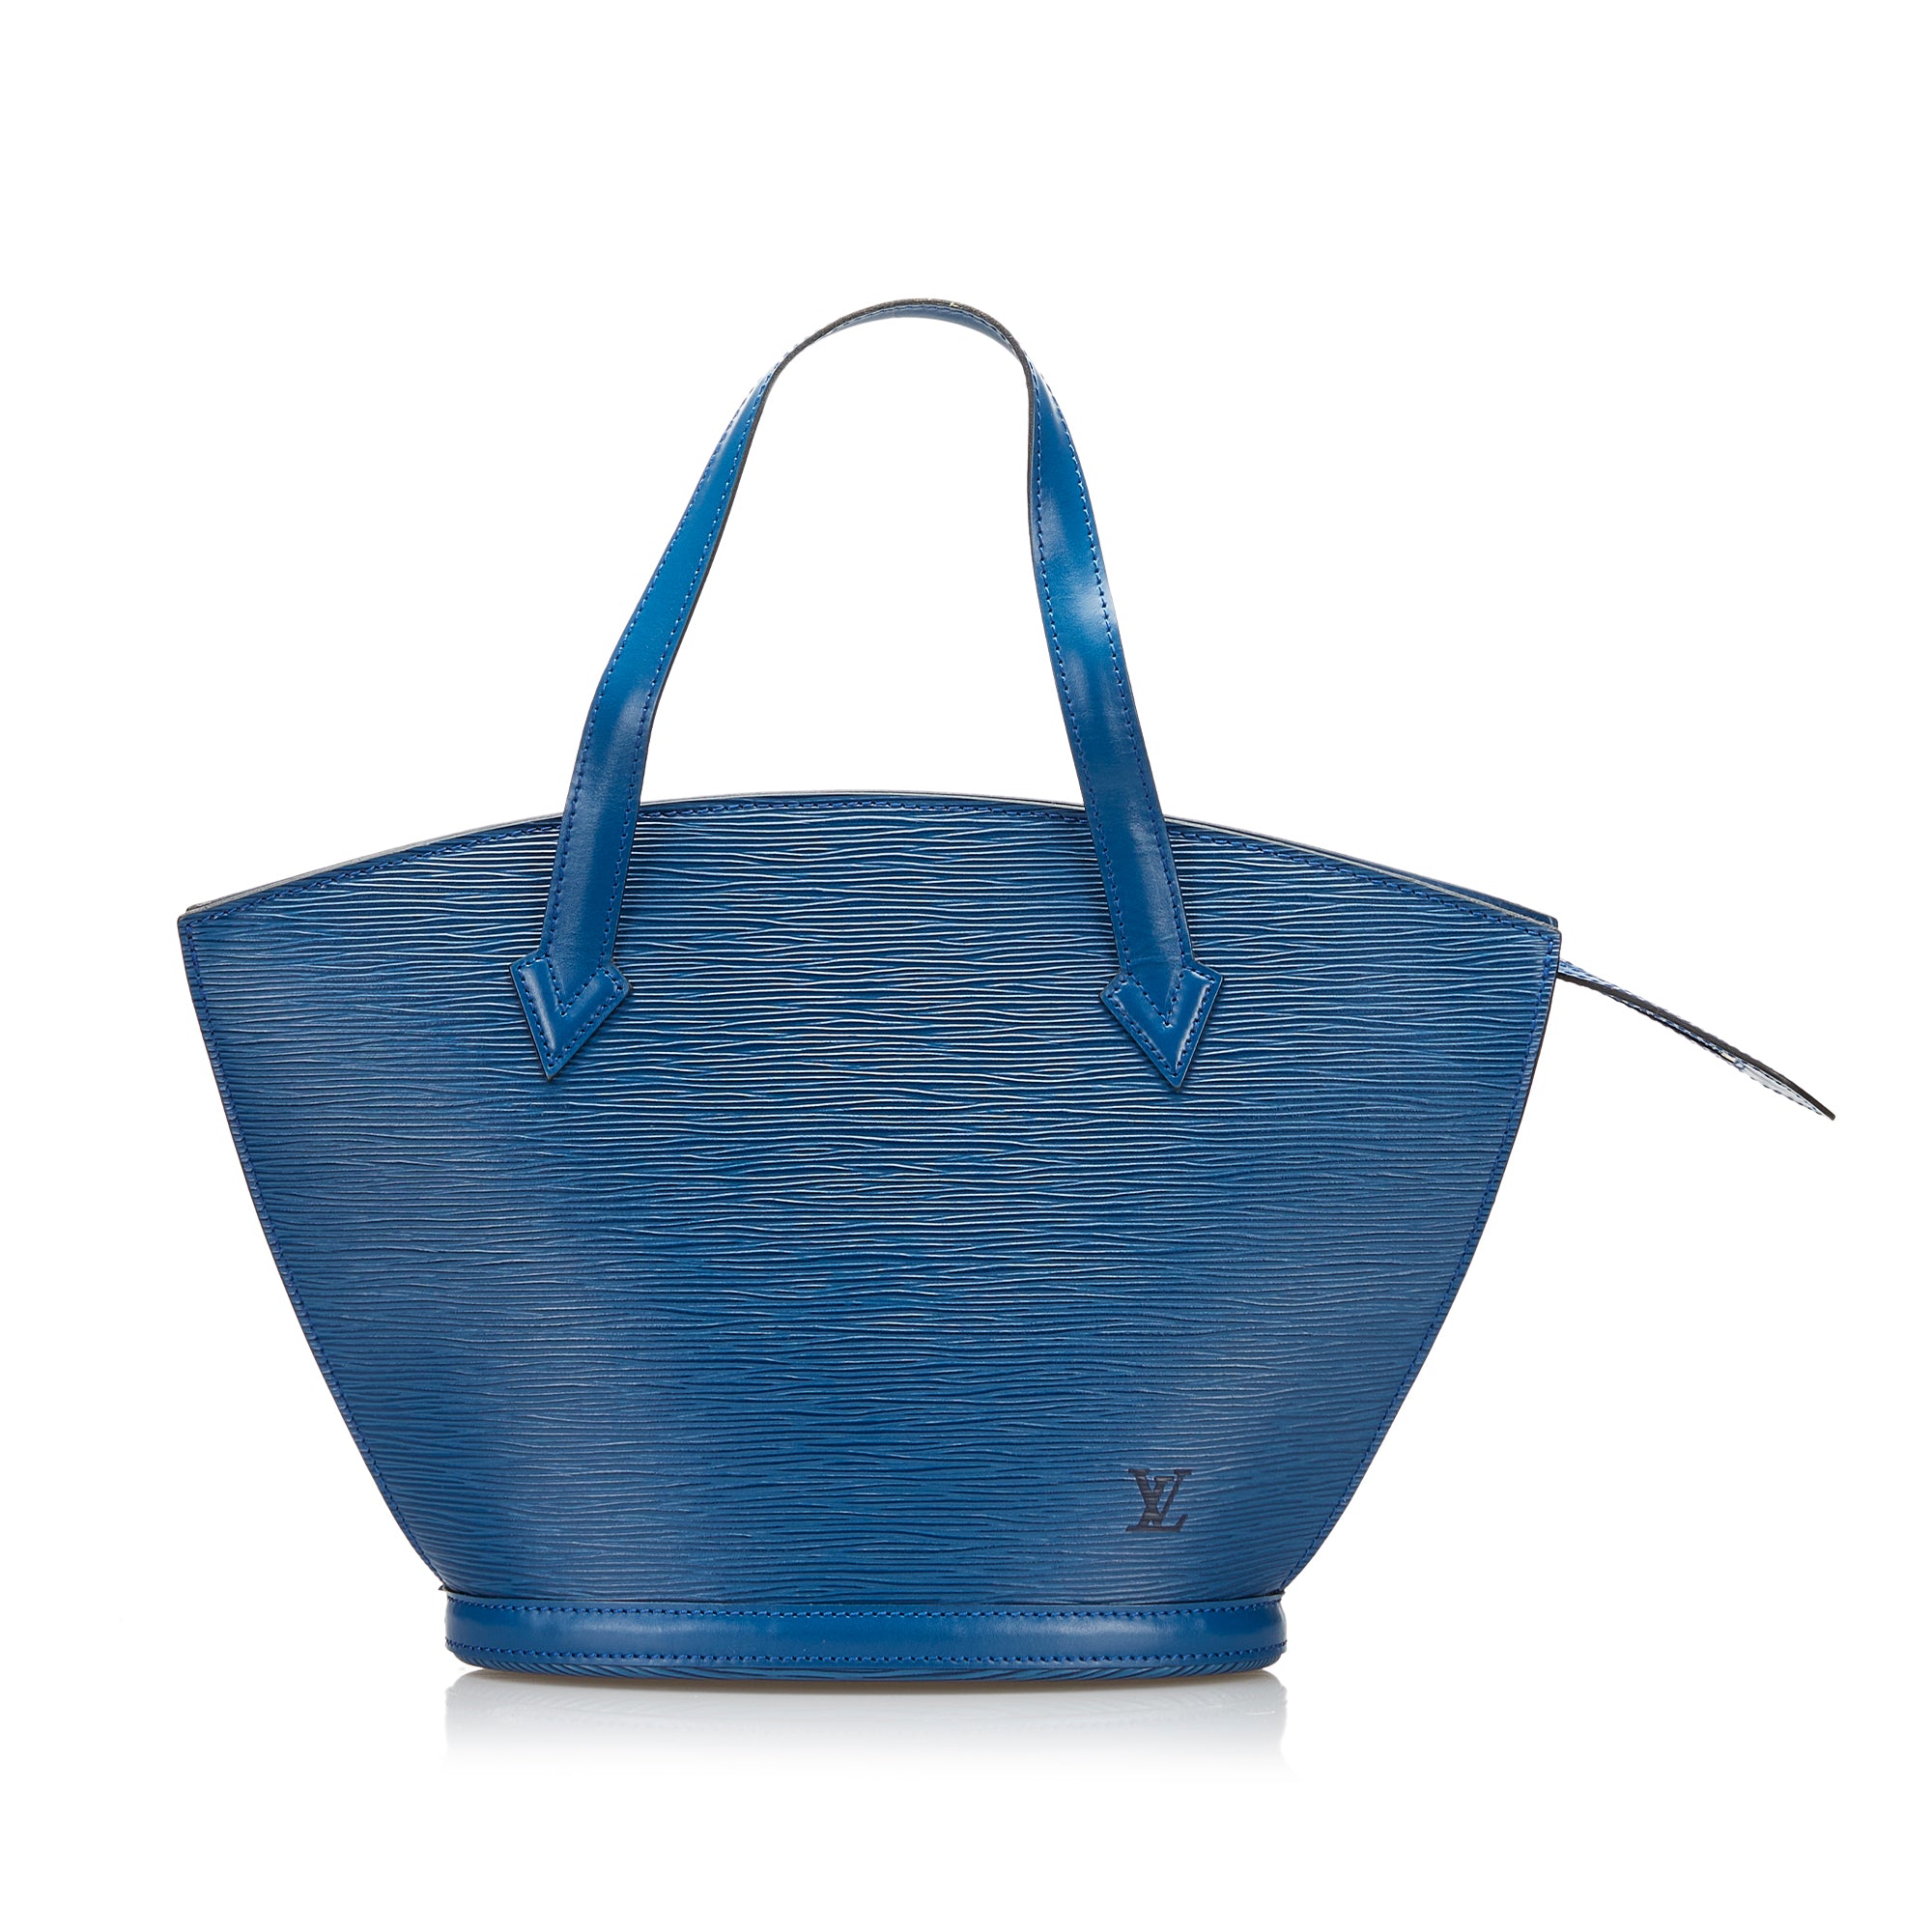 Louis Vuitton Fleur de Monogram LV Logo Bag Charm M67119